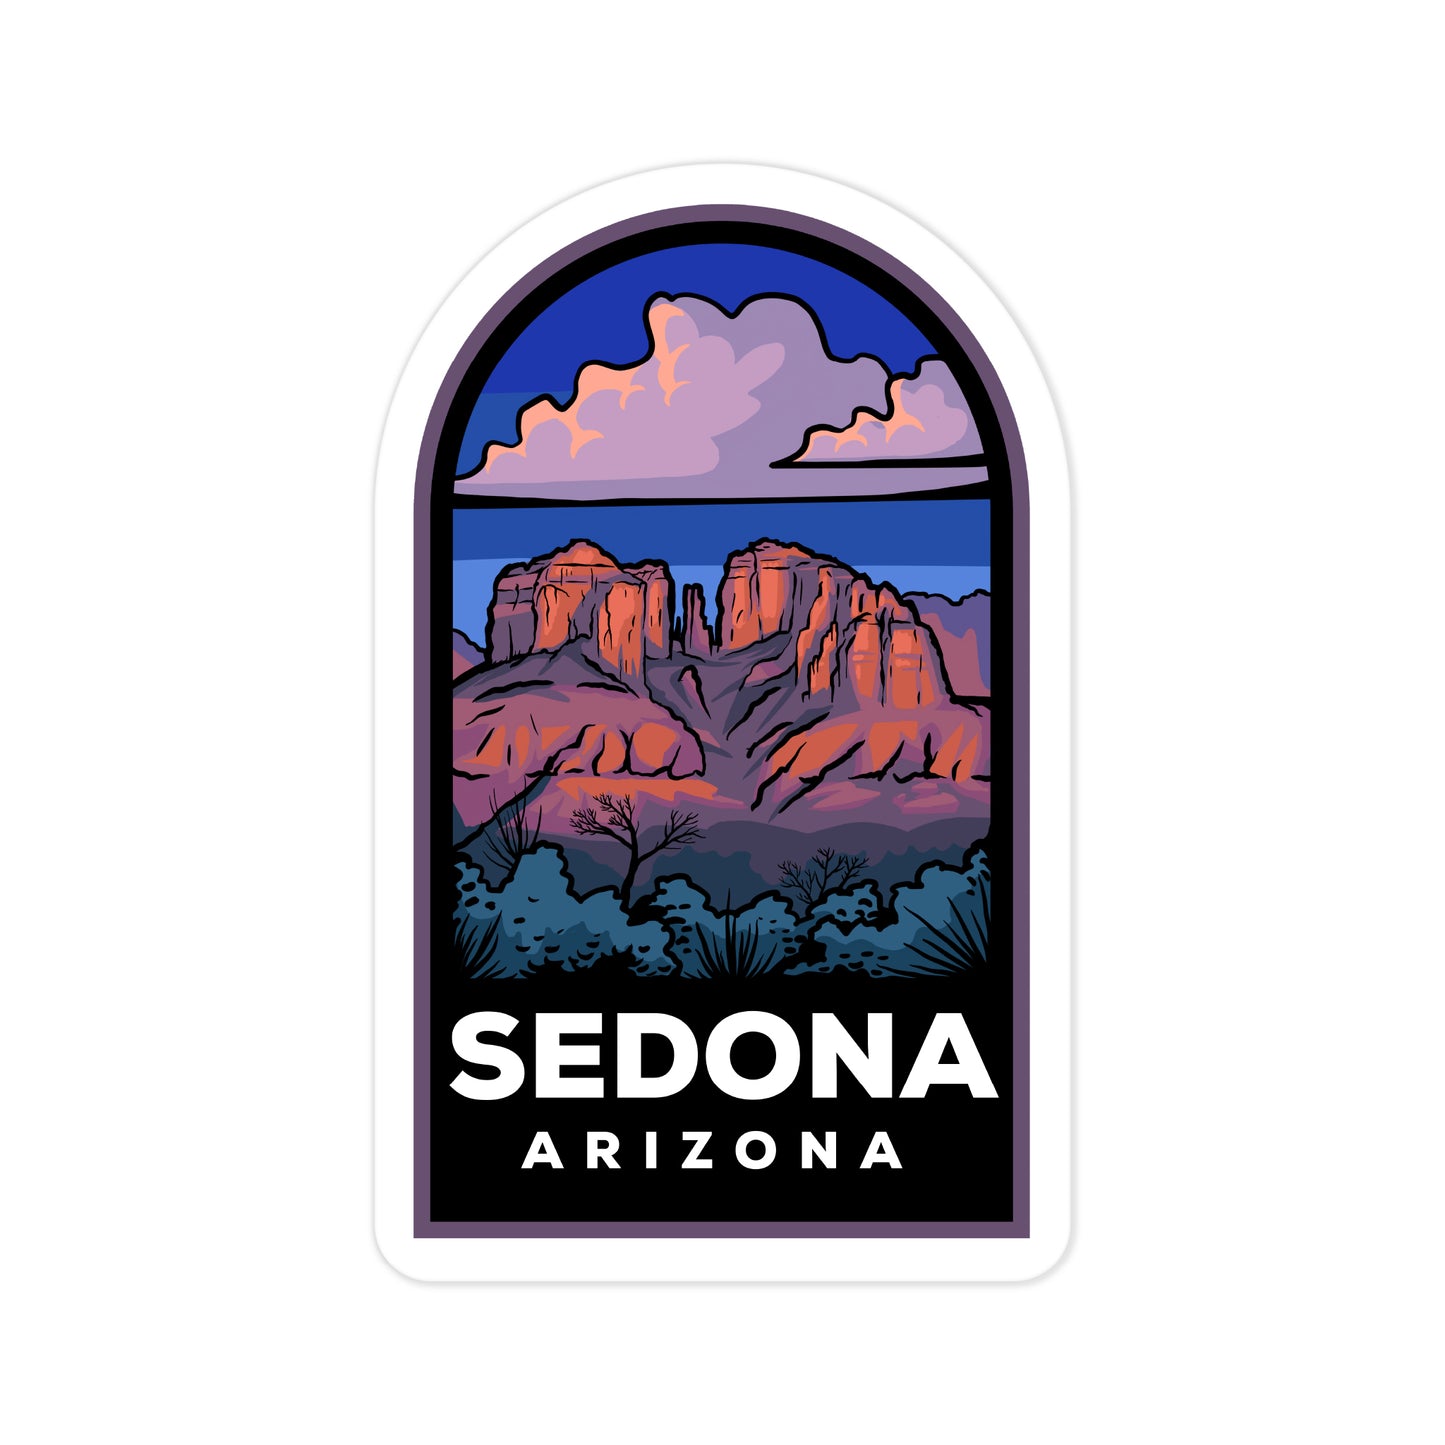 A sticker of Sedona Arizona